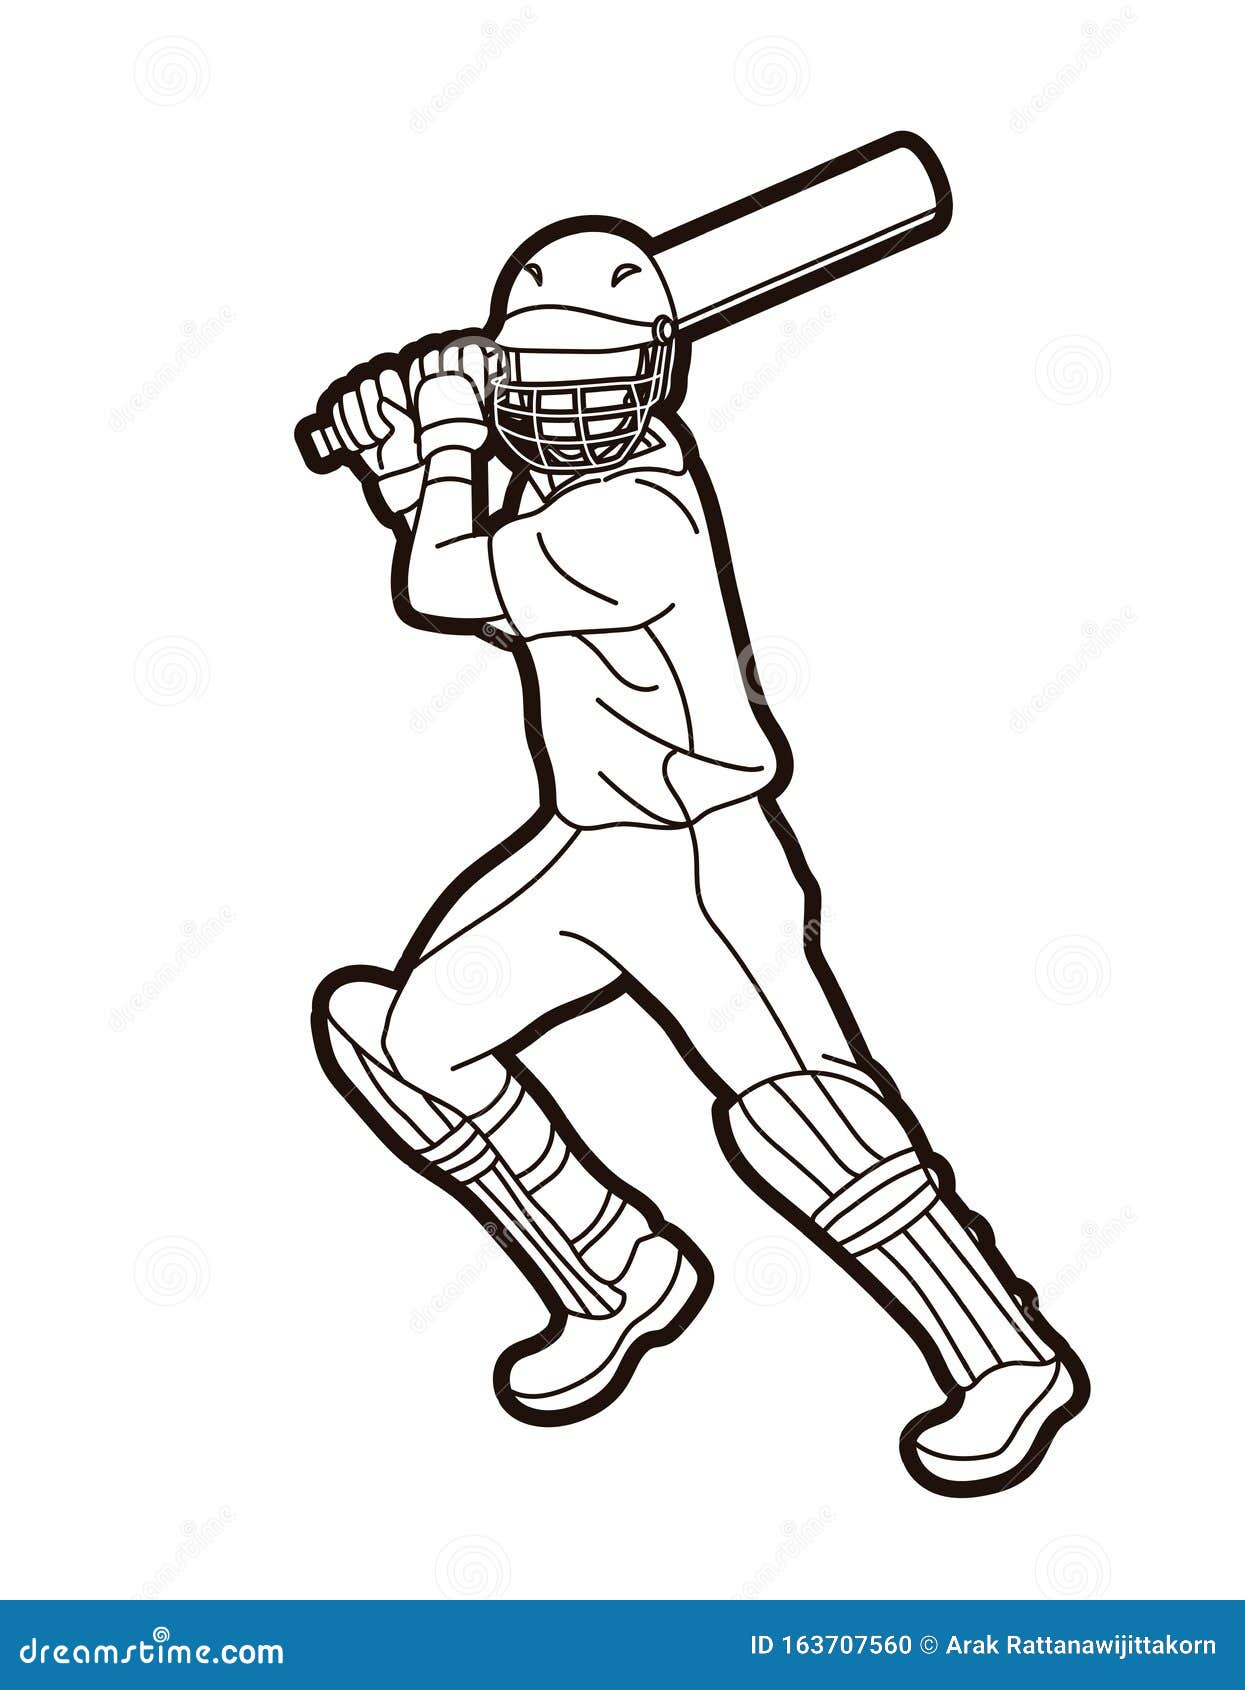 Cricket Batsman Sport Player Action Cartoon Graphic Stock Vector -  Illustration of champion, background: 163707560